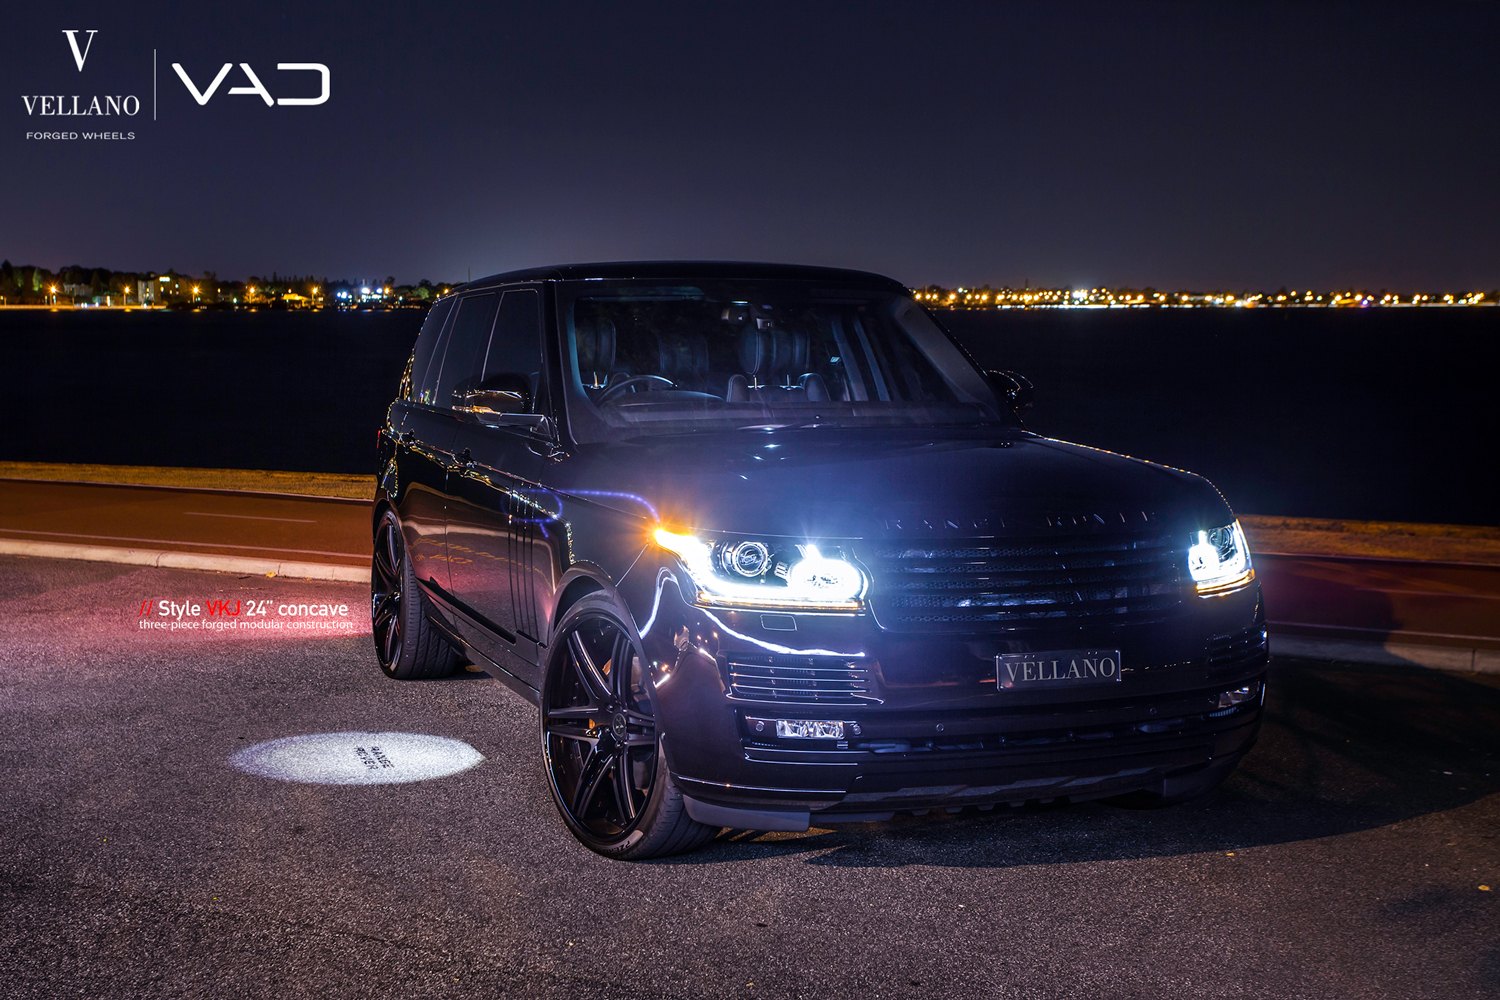 Aftermarket Headlights on Black Range Rover - Photo by Vellano